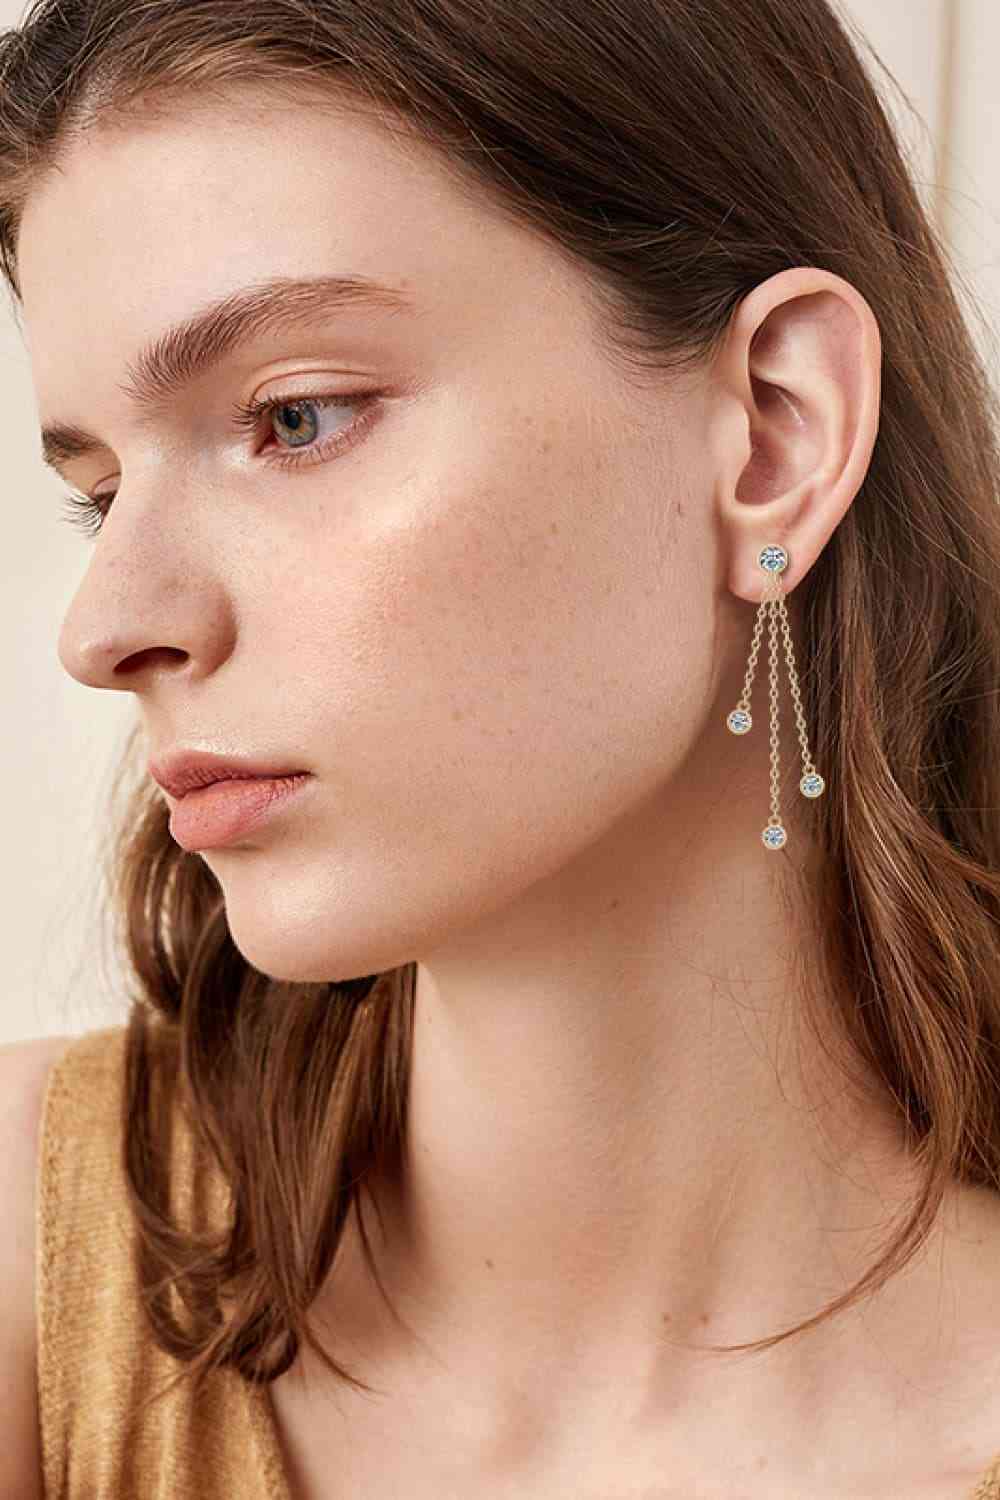 a woman wearing a pair of earrings